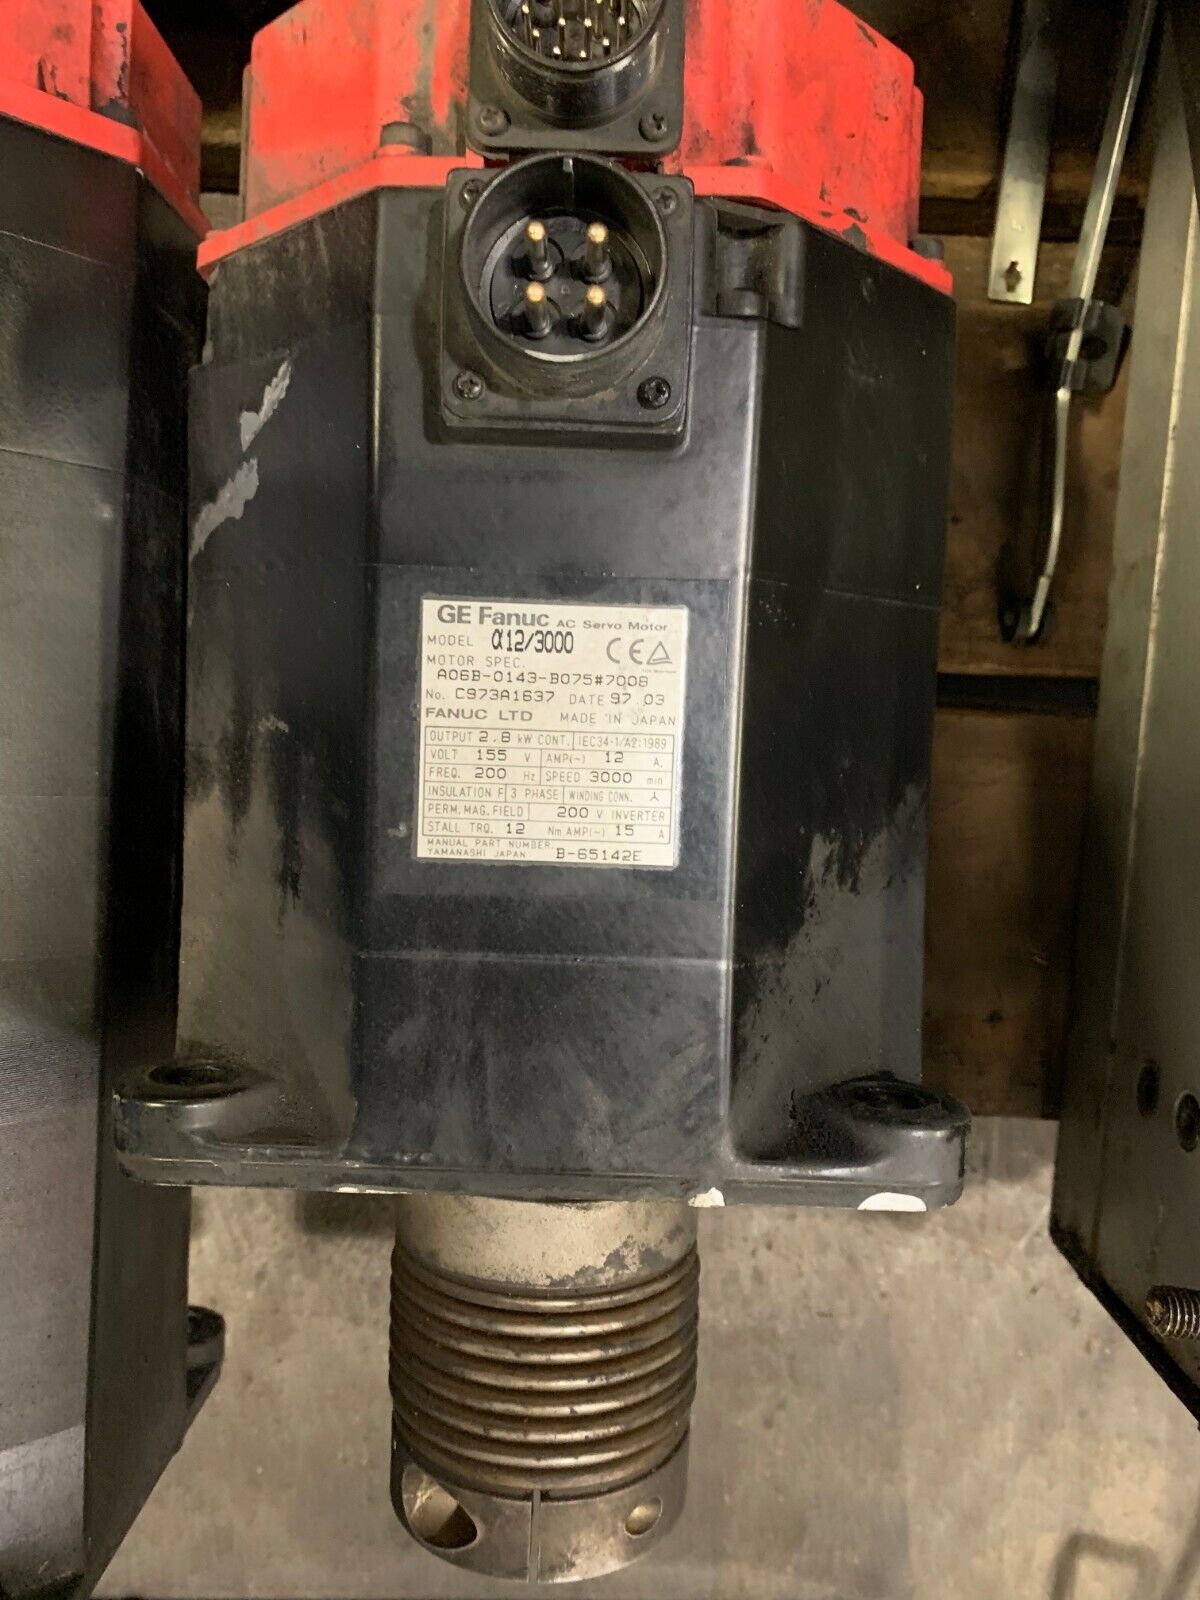 Fanuc Servo Motor A06B-0143-B075 #7008 Removed from Cincinnati Laser